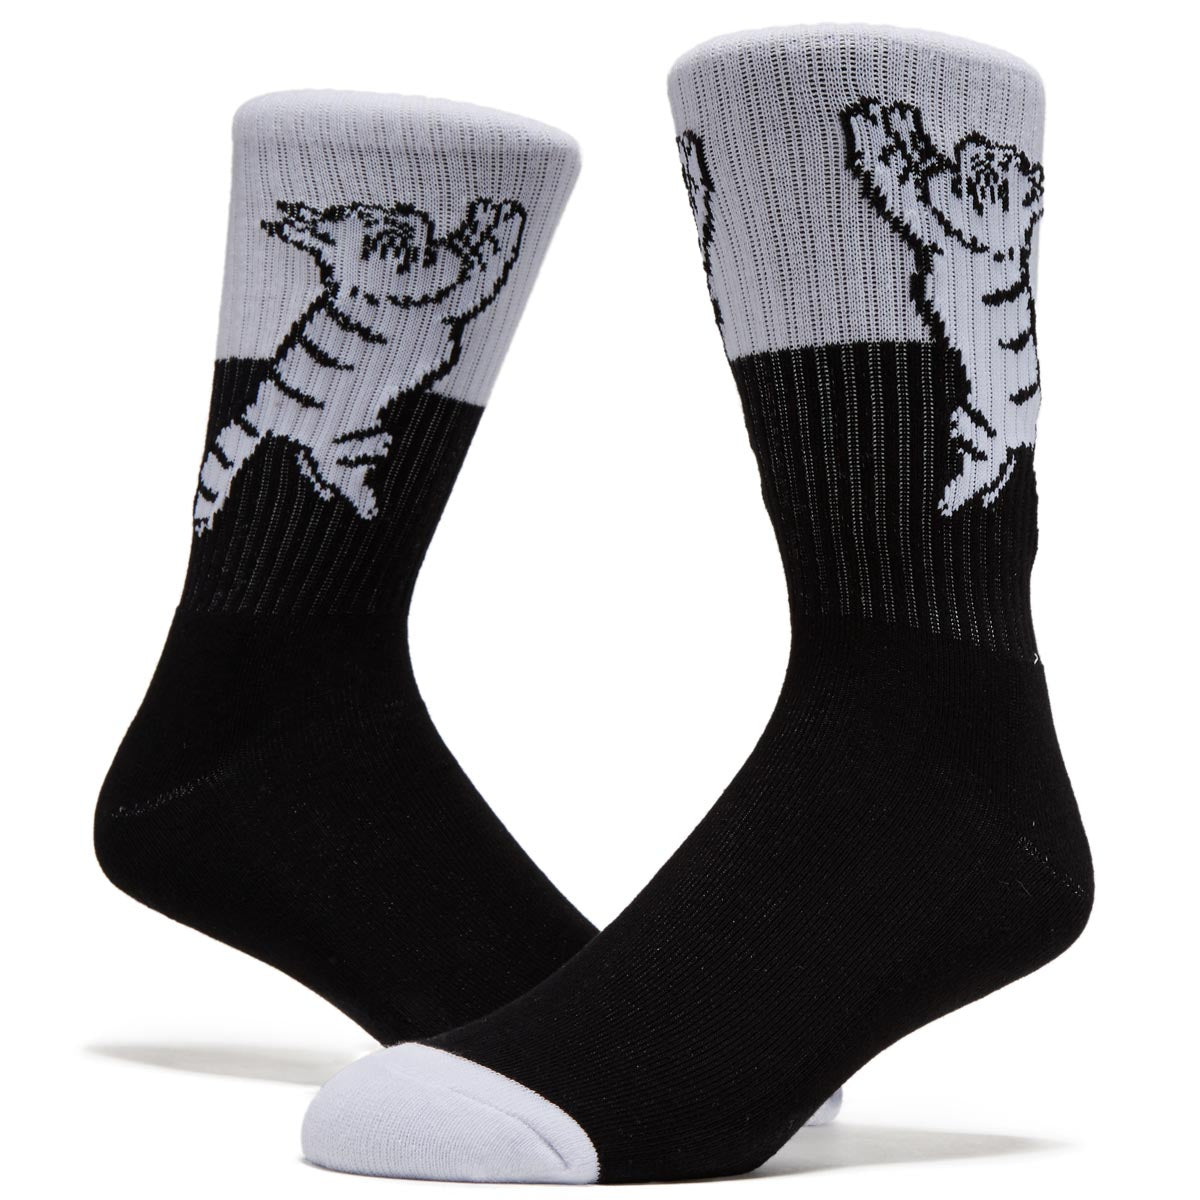 Theories Conscious Kitty 2 Tone Socks - Black/White image 2